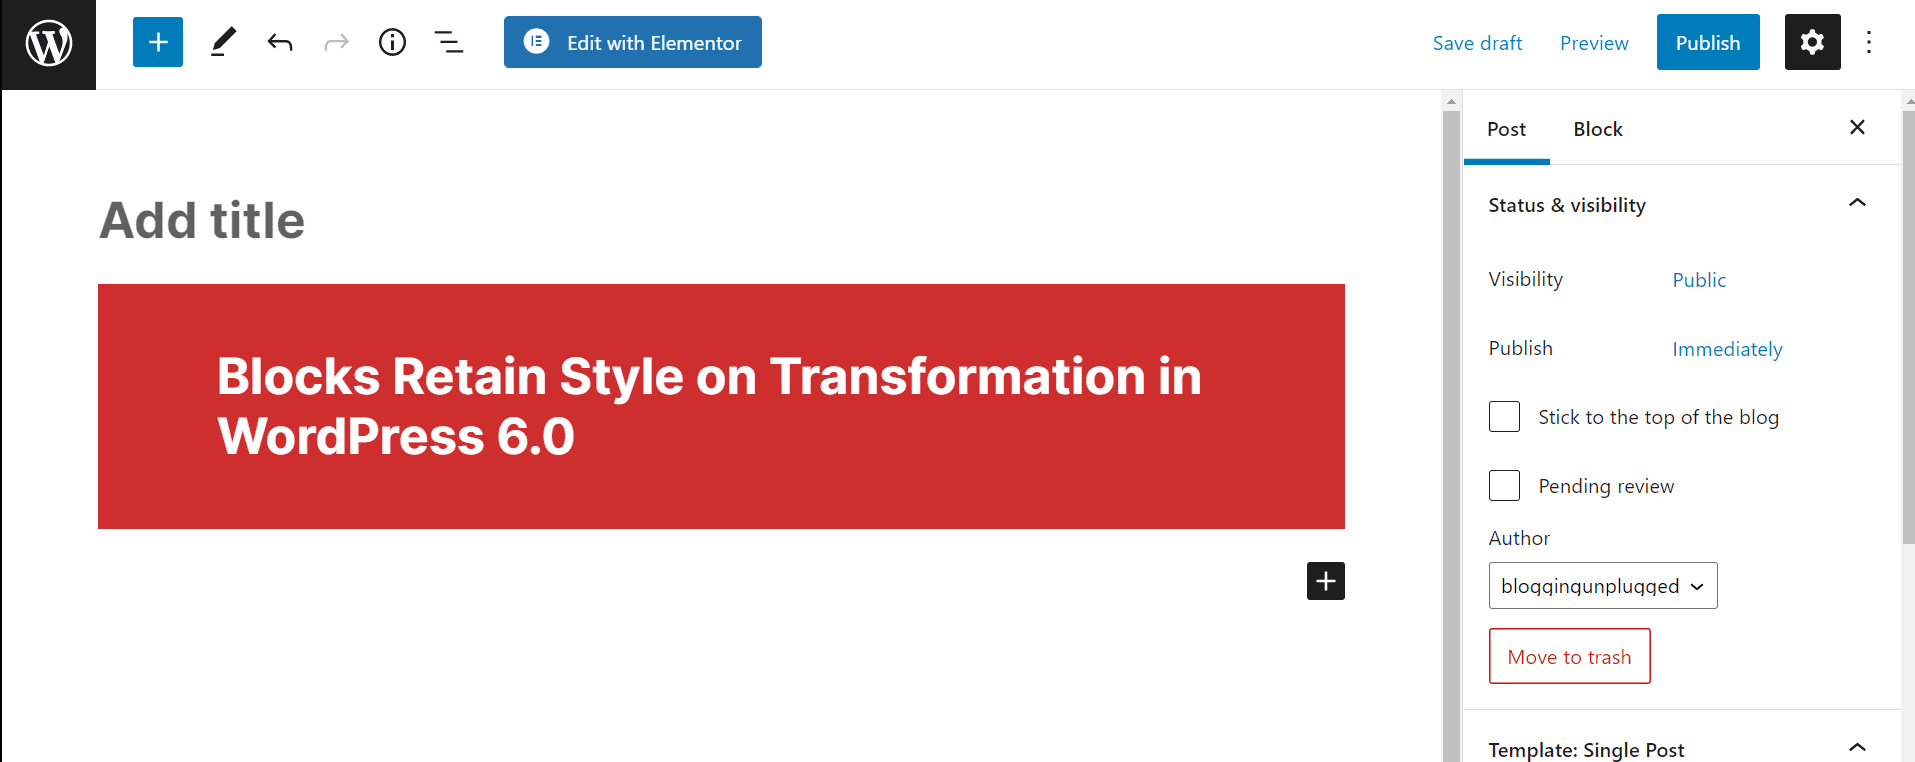 Blocks retain styles on transformation in WordPress 6.0